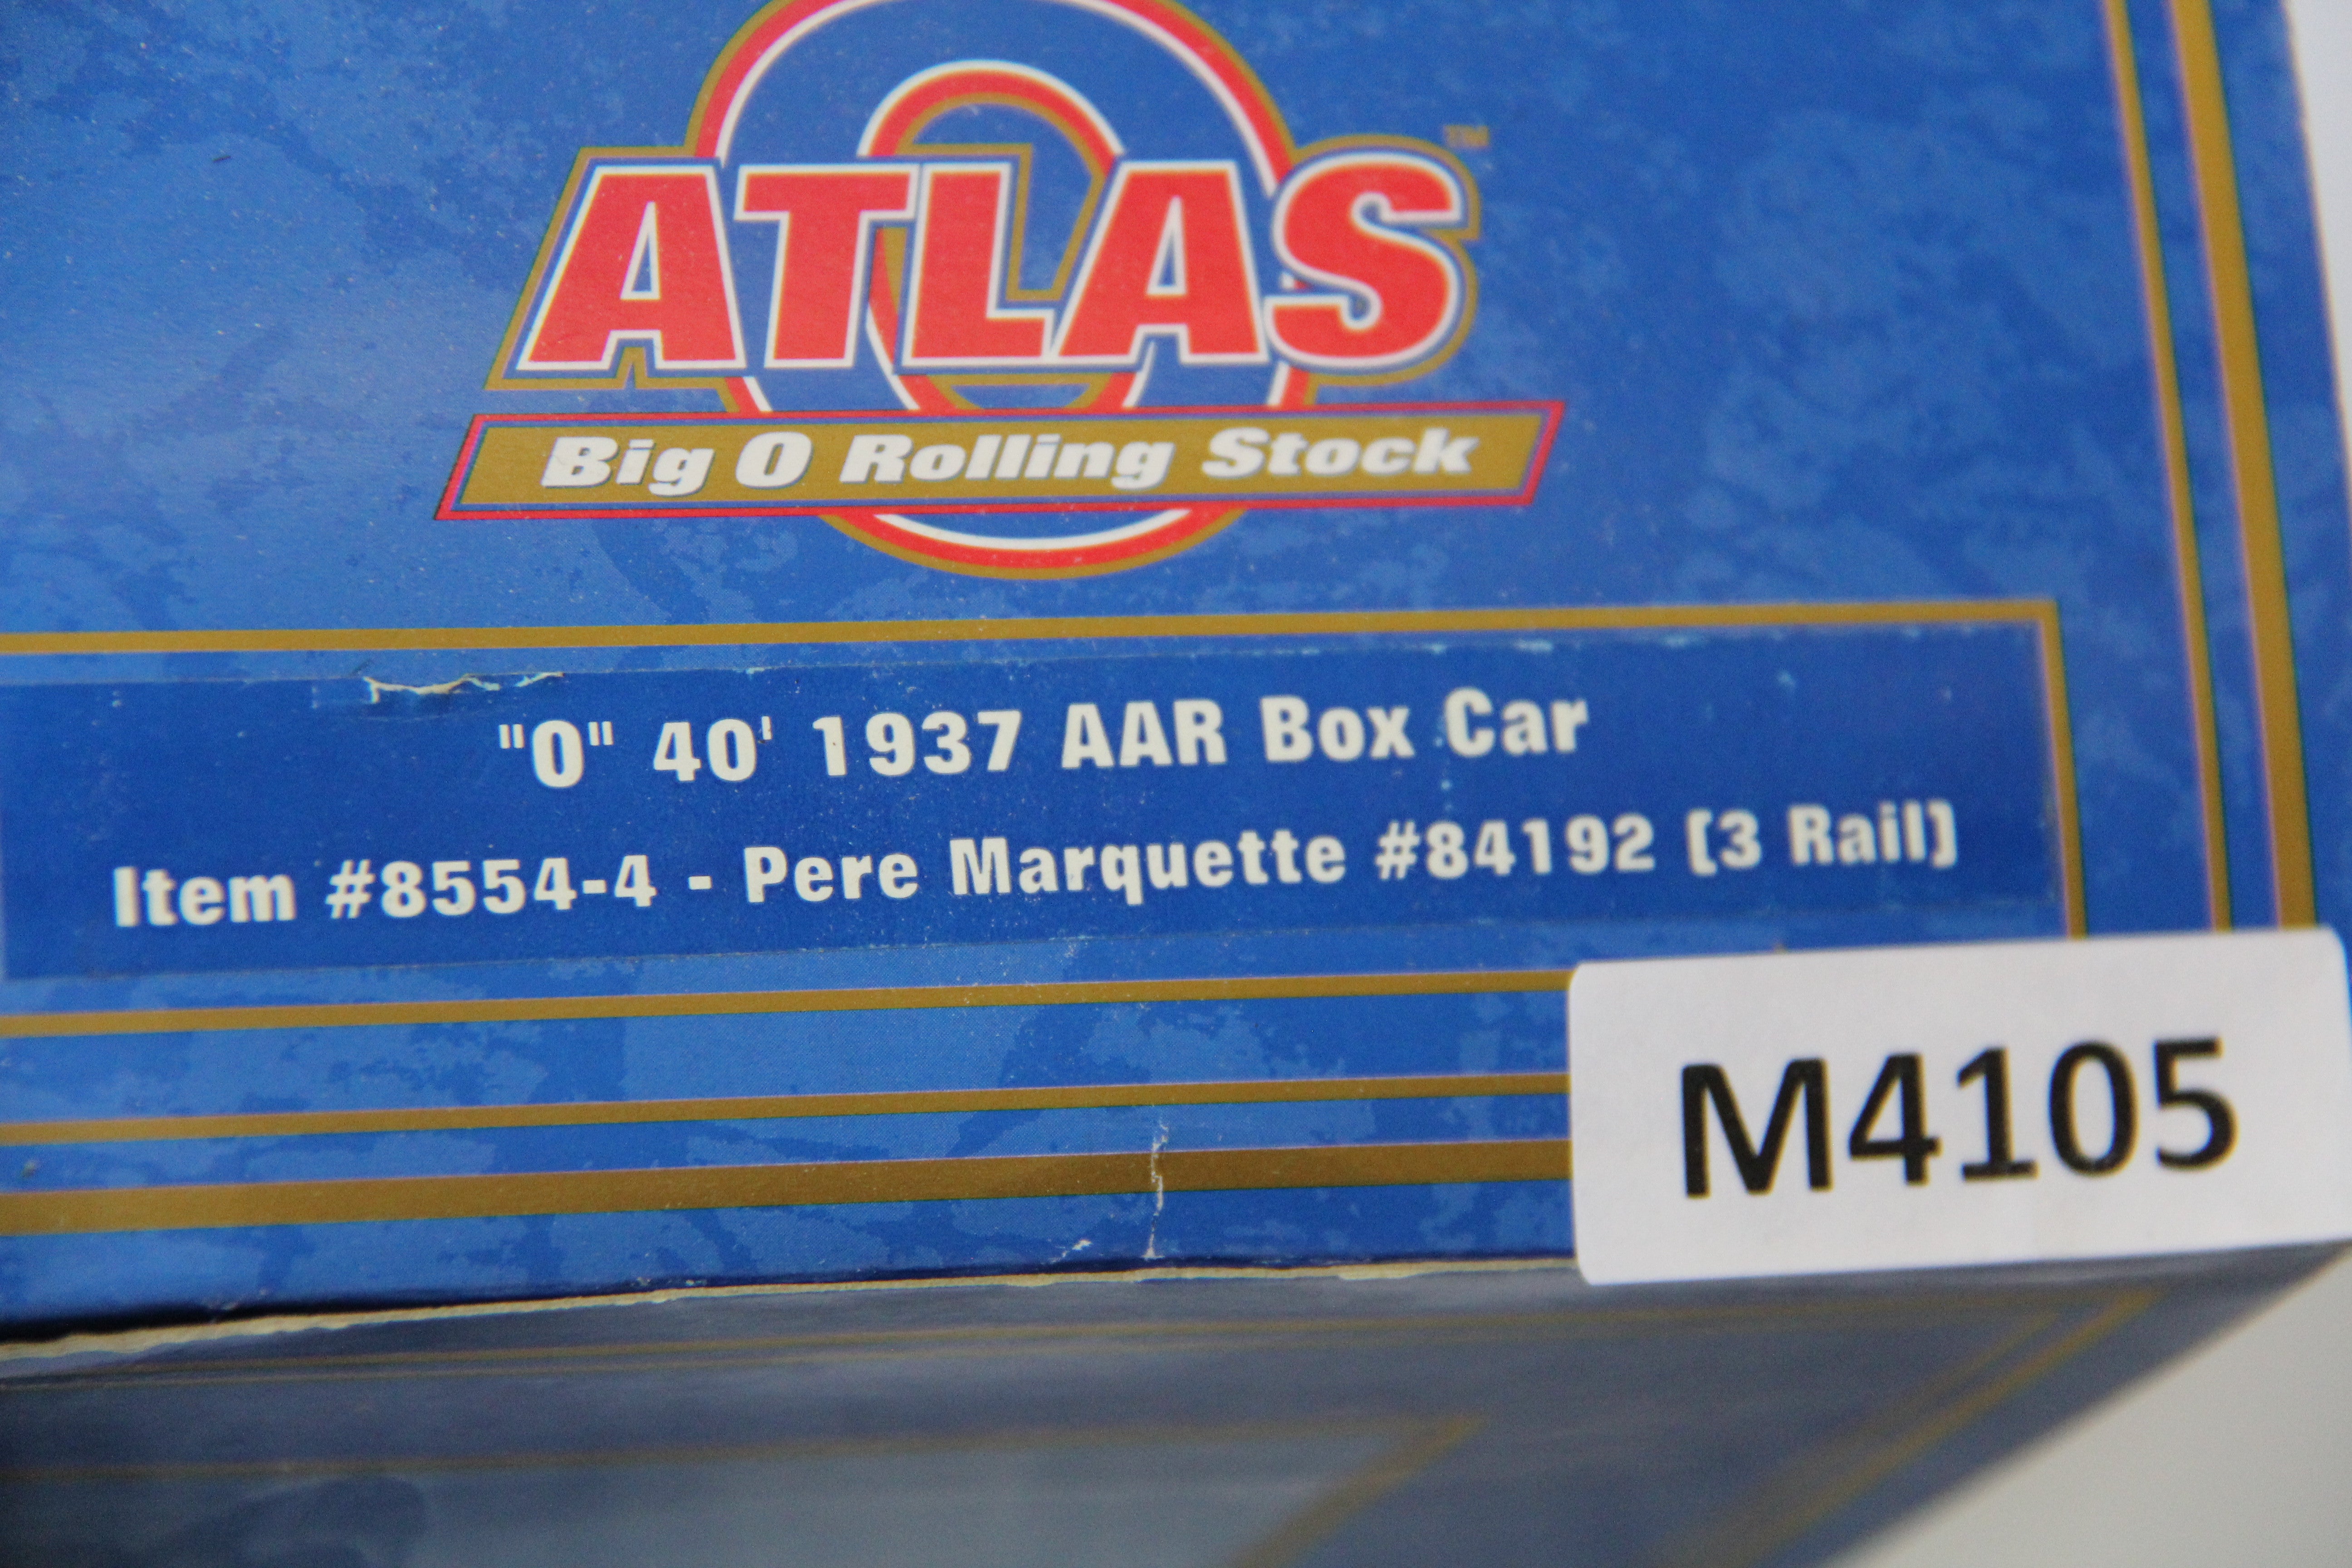 Atlas #8554-4 Pere Marquette 40' 1937 AAR Box Car-Second hand-M4105